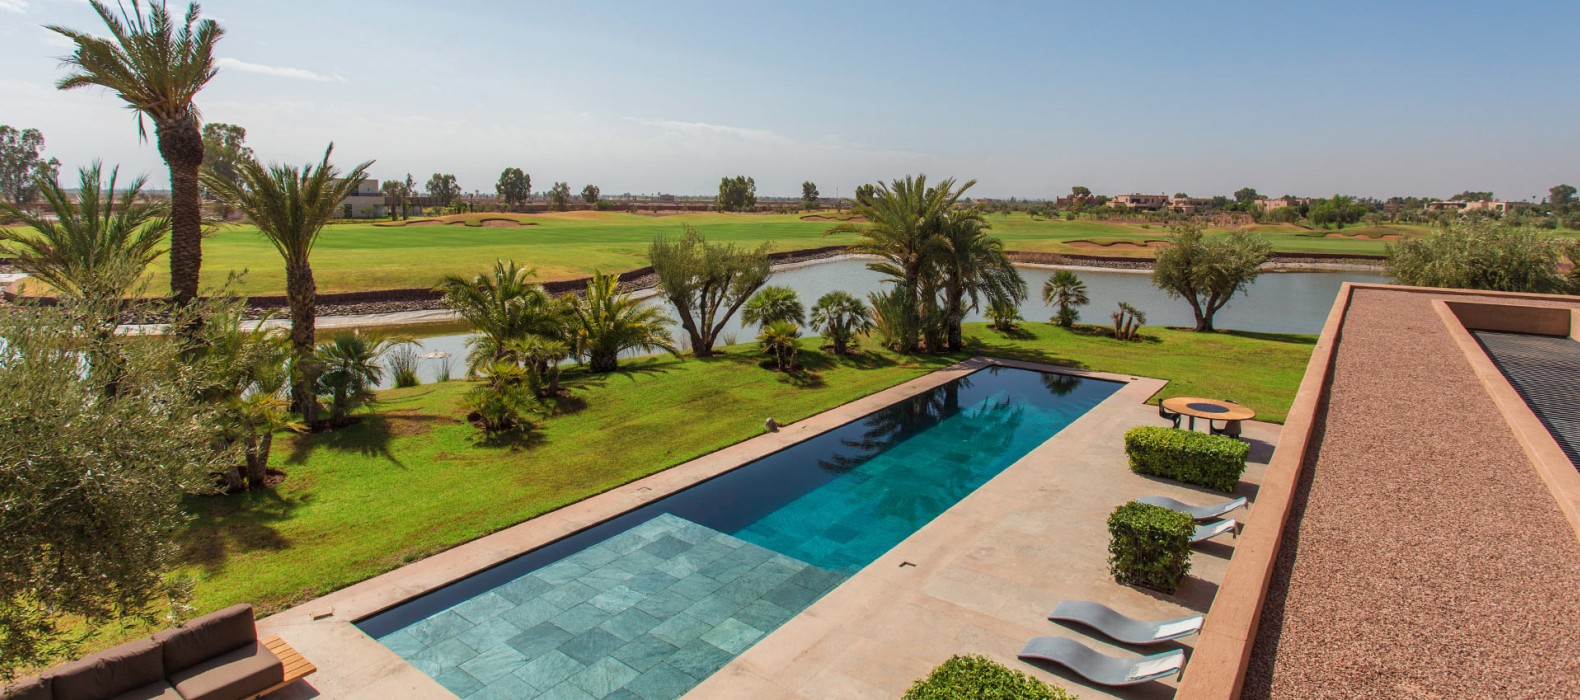 Landscape view of Villa Golf Saharien in Marrakech